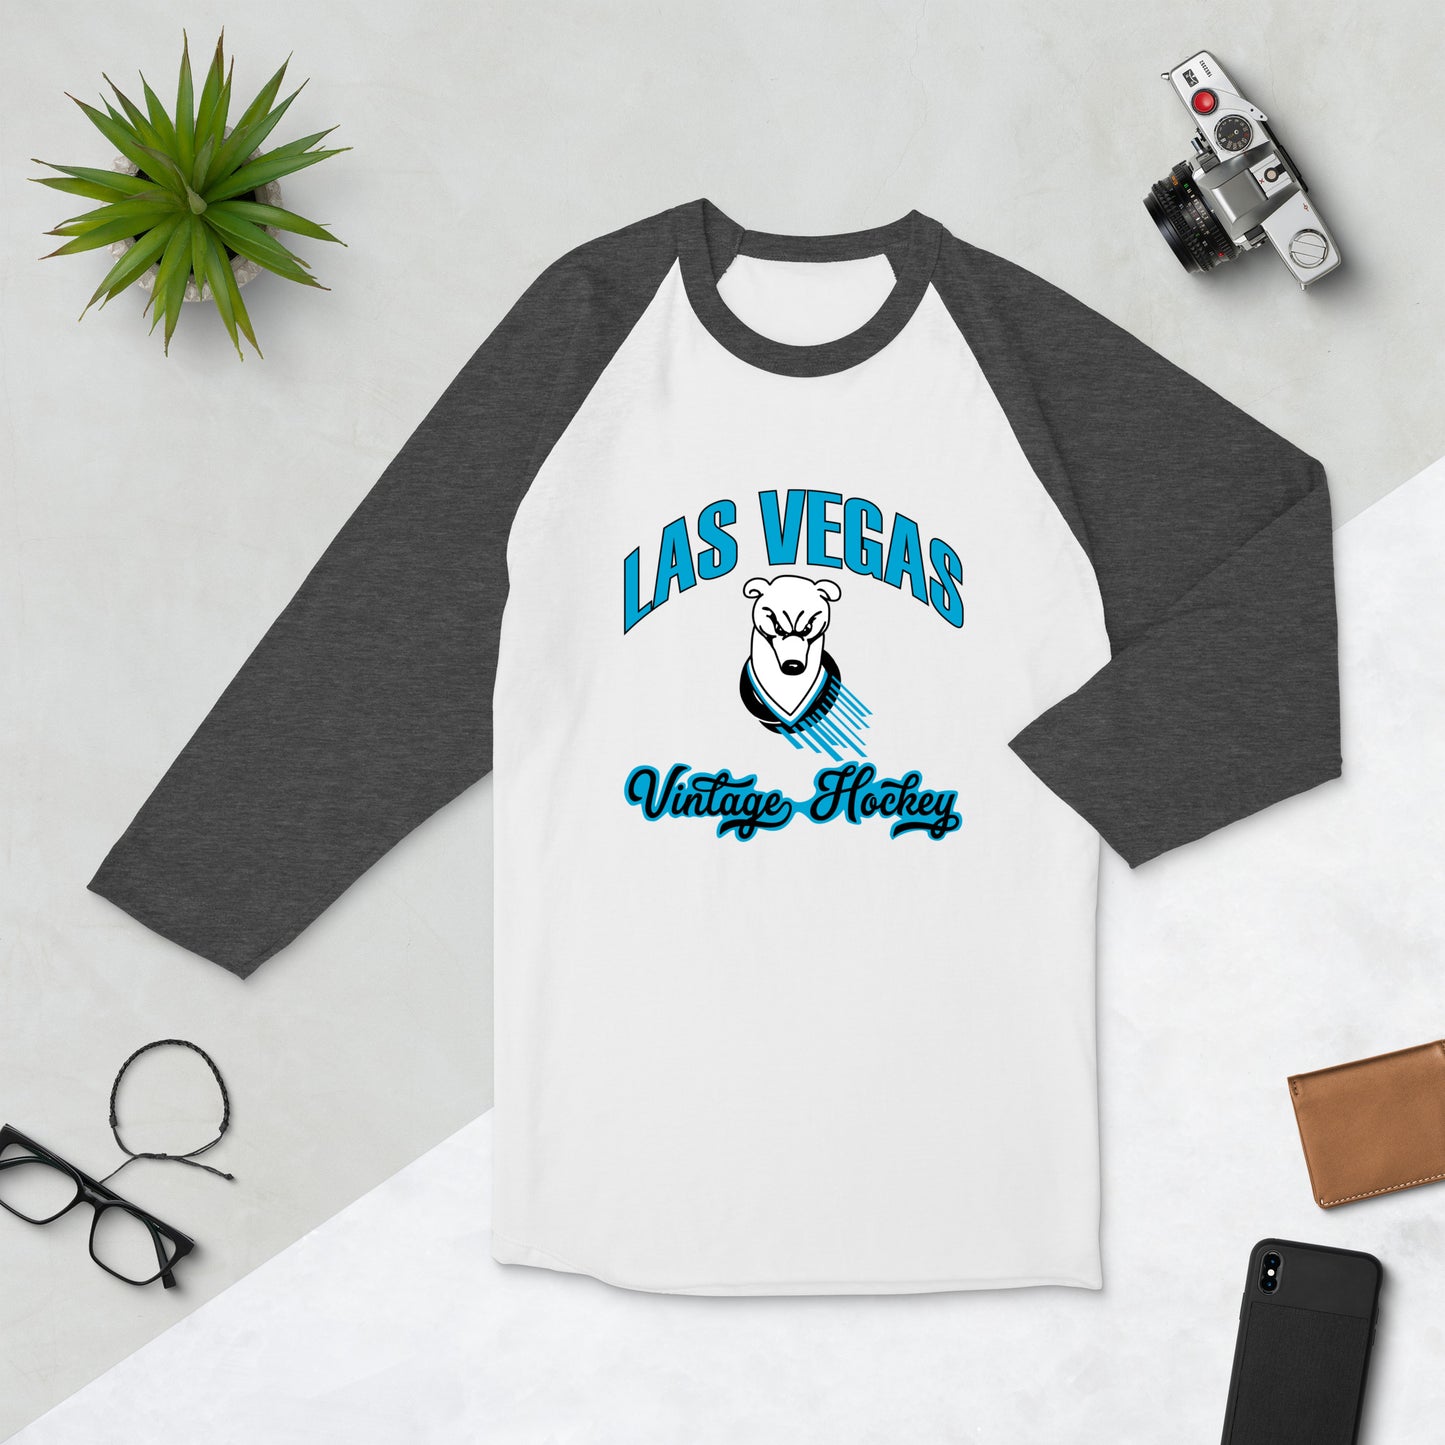 Las Vegas Las Vegas Vintage Hockey 3/4 Sleeve Raglan Shirt - White/Heather Charcoal